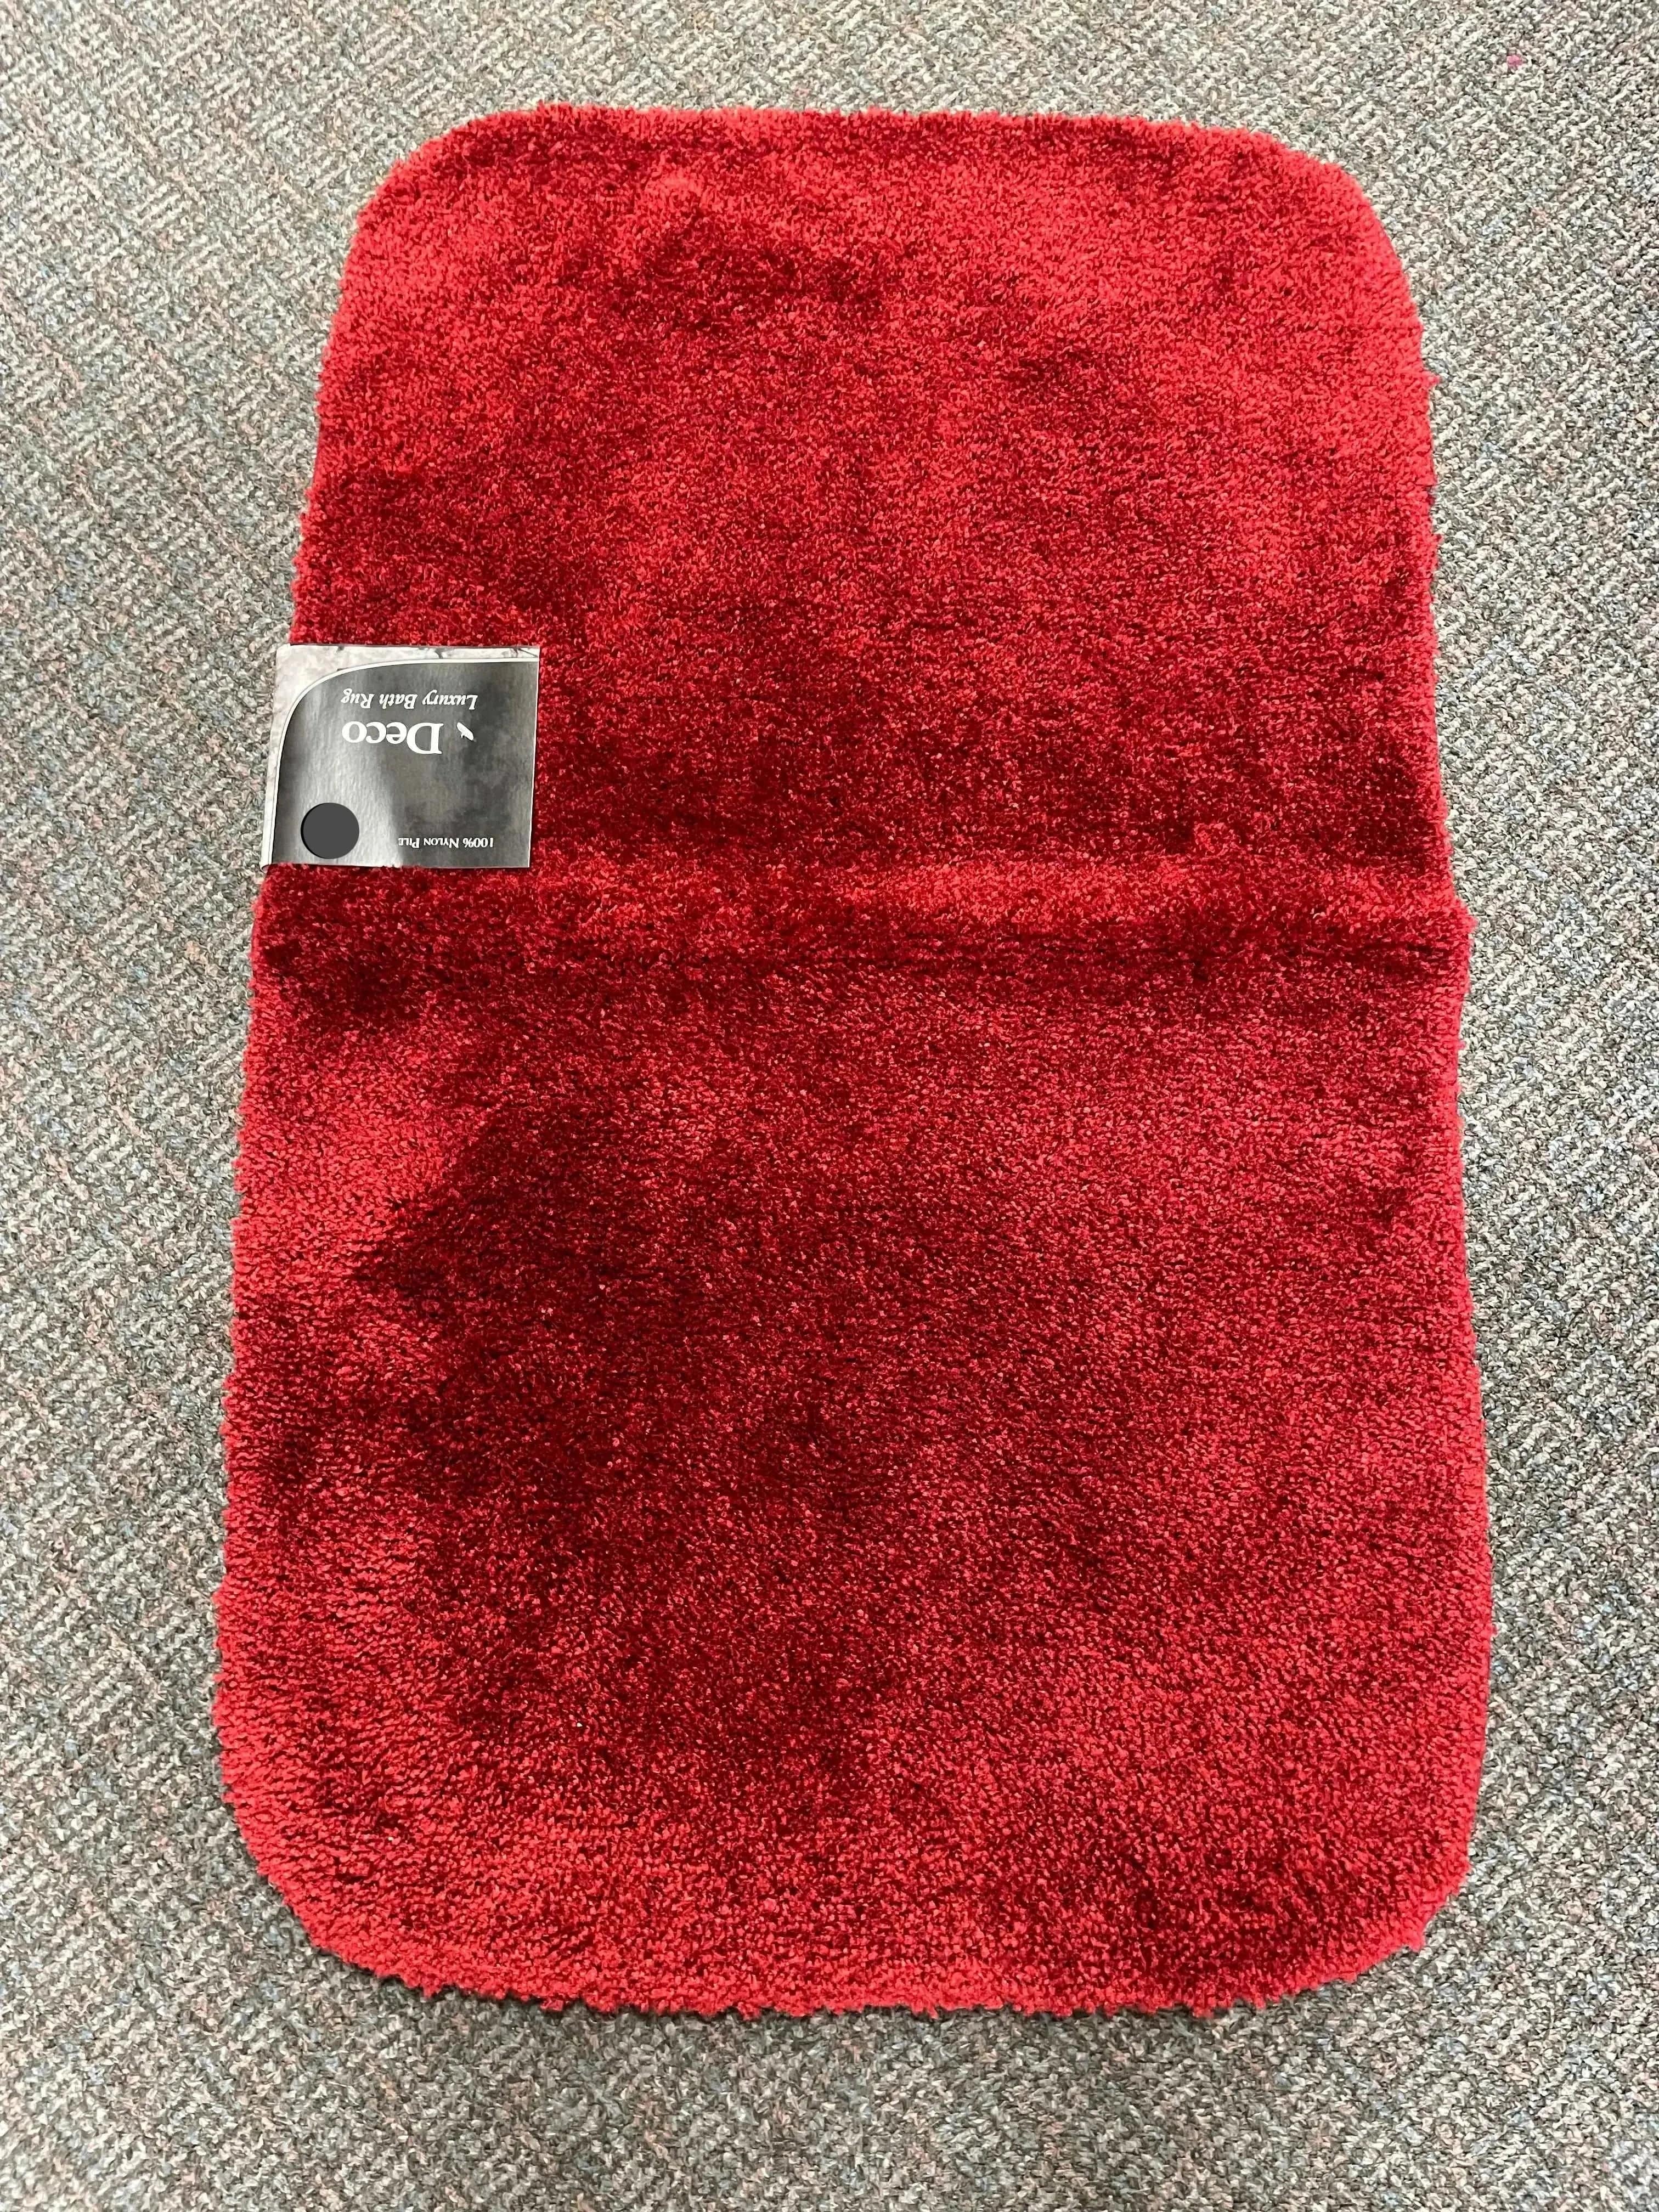 Linen World bathroom rugs Chili Pepper / 21x34 Thick bathroom rugs